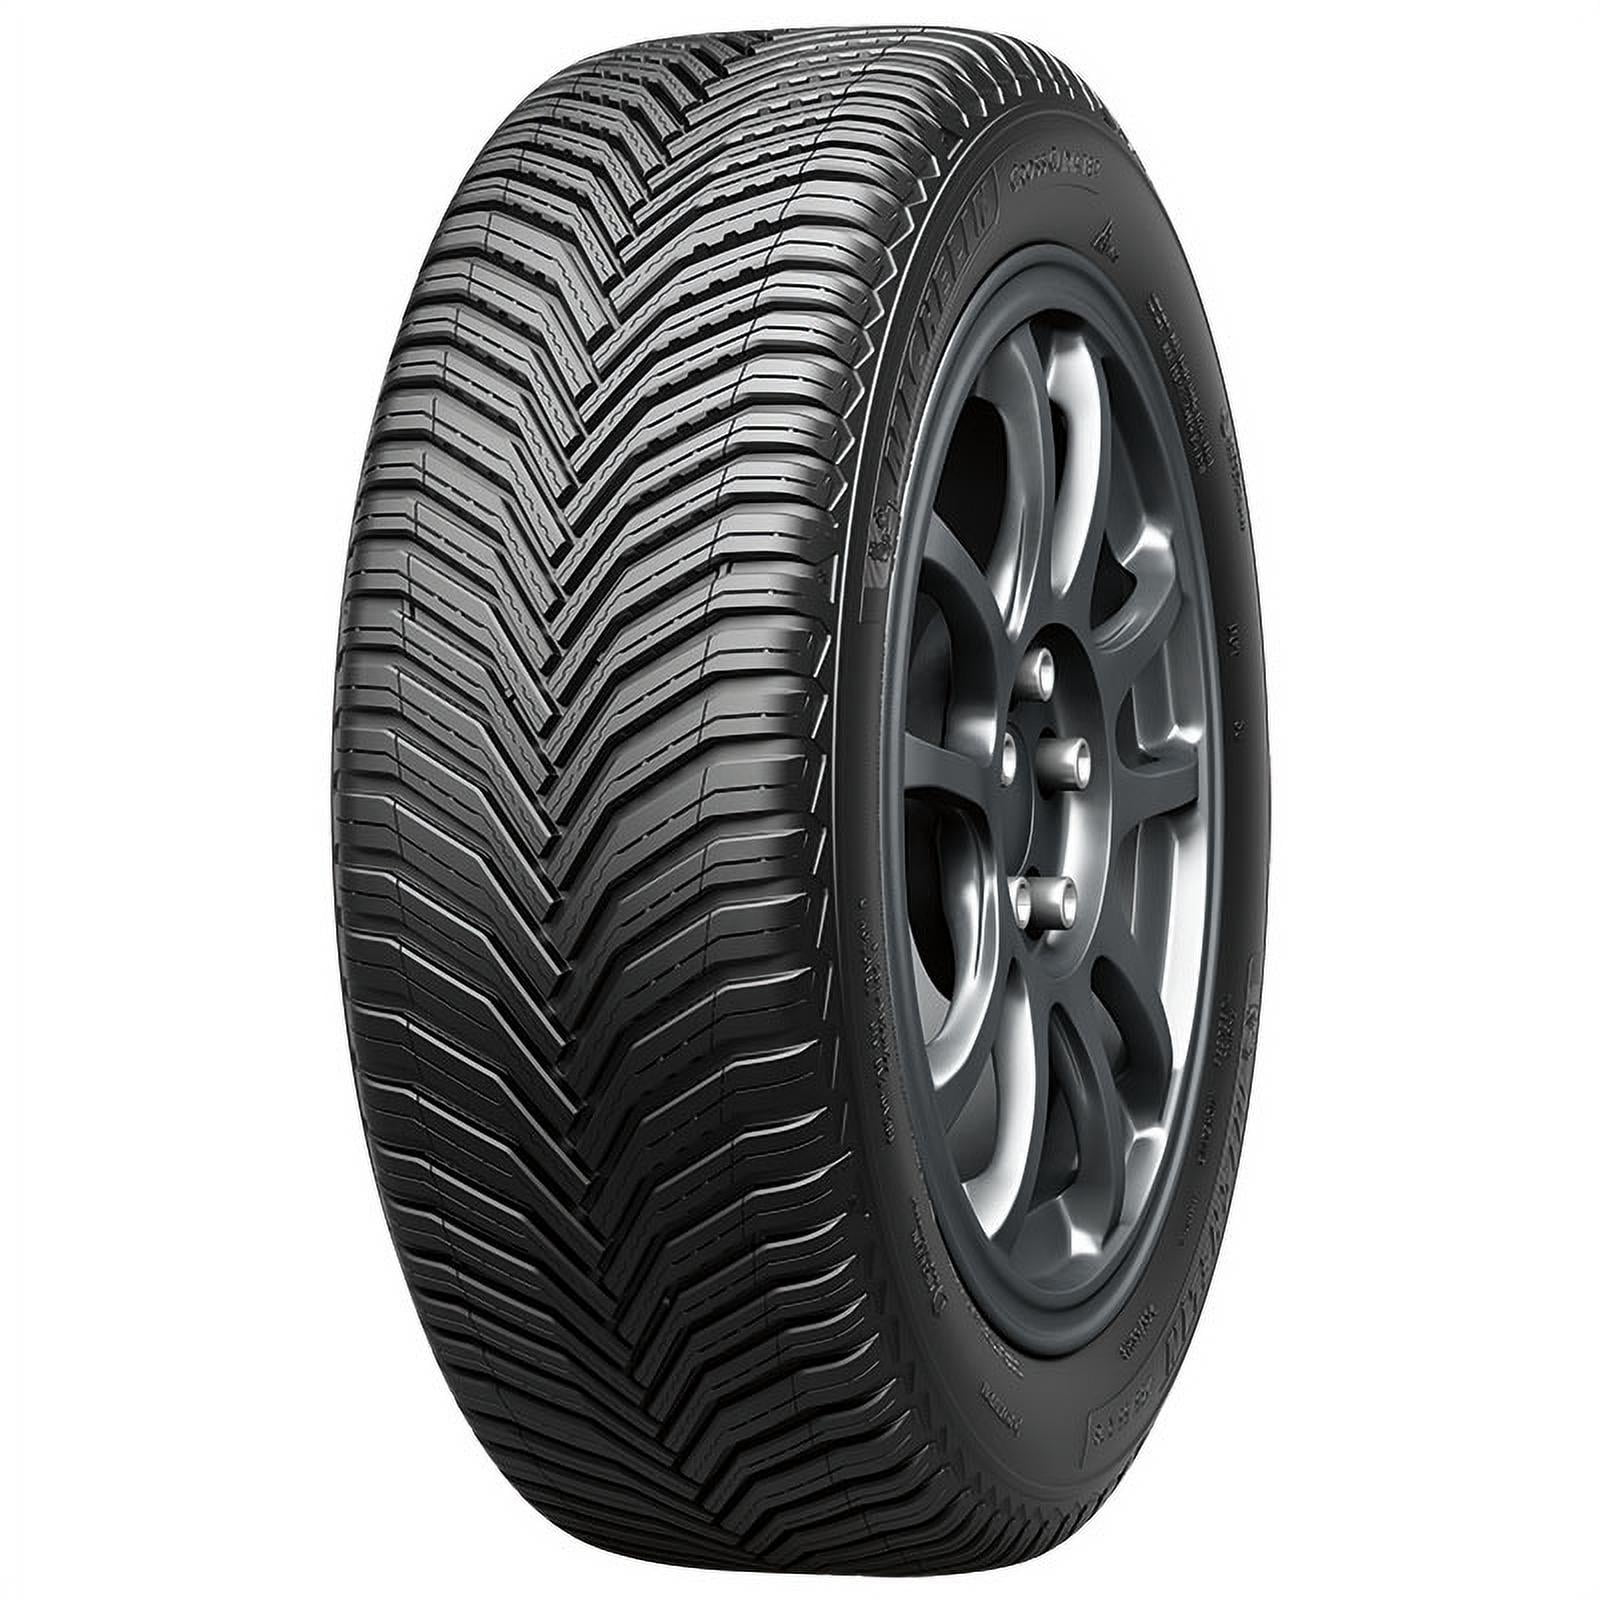 Climate2 102V 245/50R20 Jeep Tires 2016-18 Jet, Cross of Limited A/W Elite Pilot 4 Liberty 2012 Michelin Honda Set Fits: